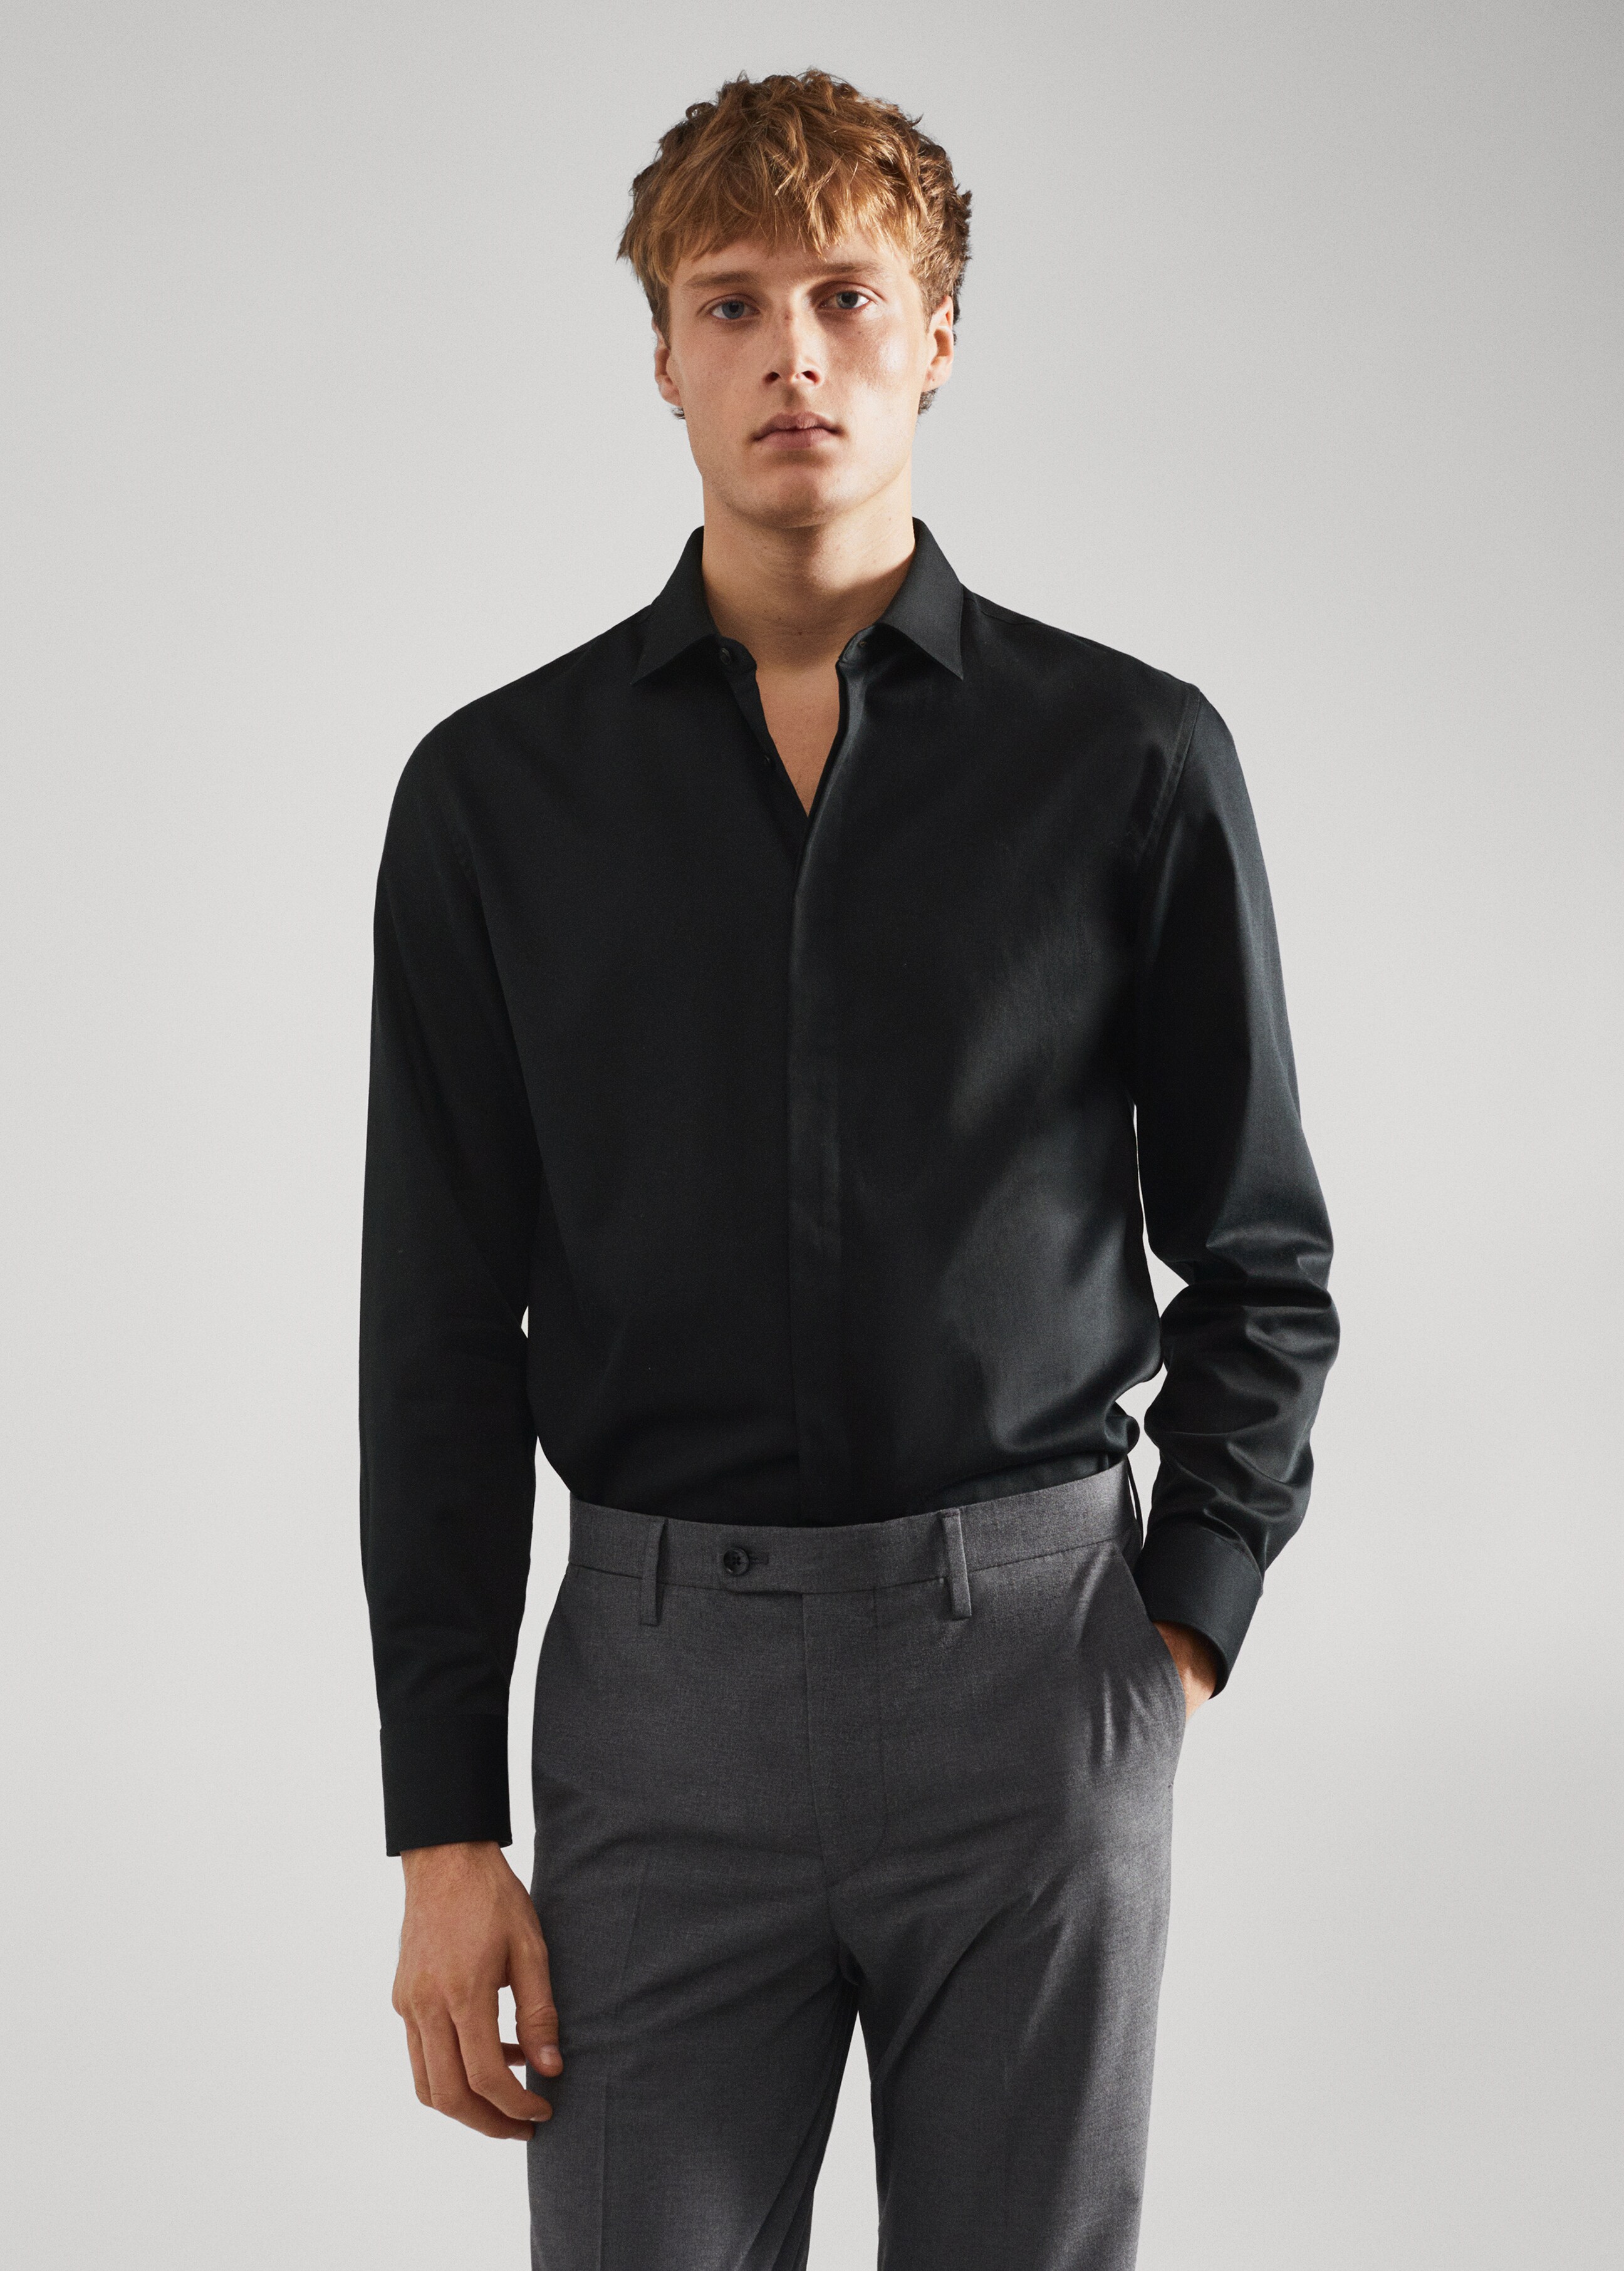 Slim-fit suit shirt with hidden buttons - Medium plane